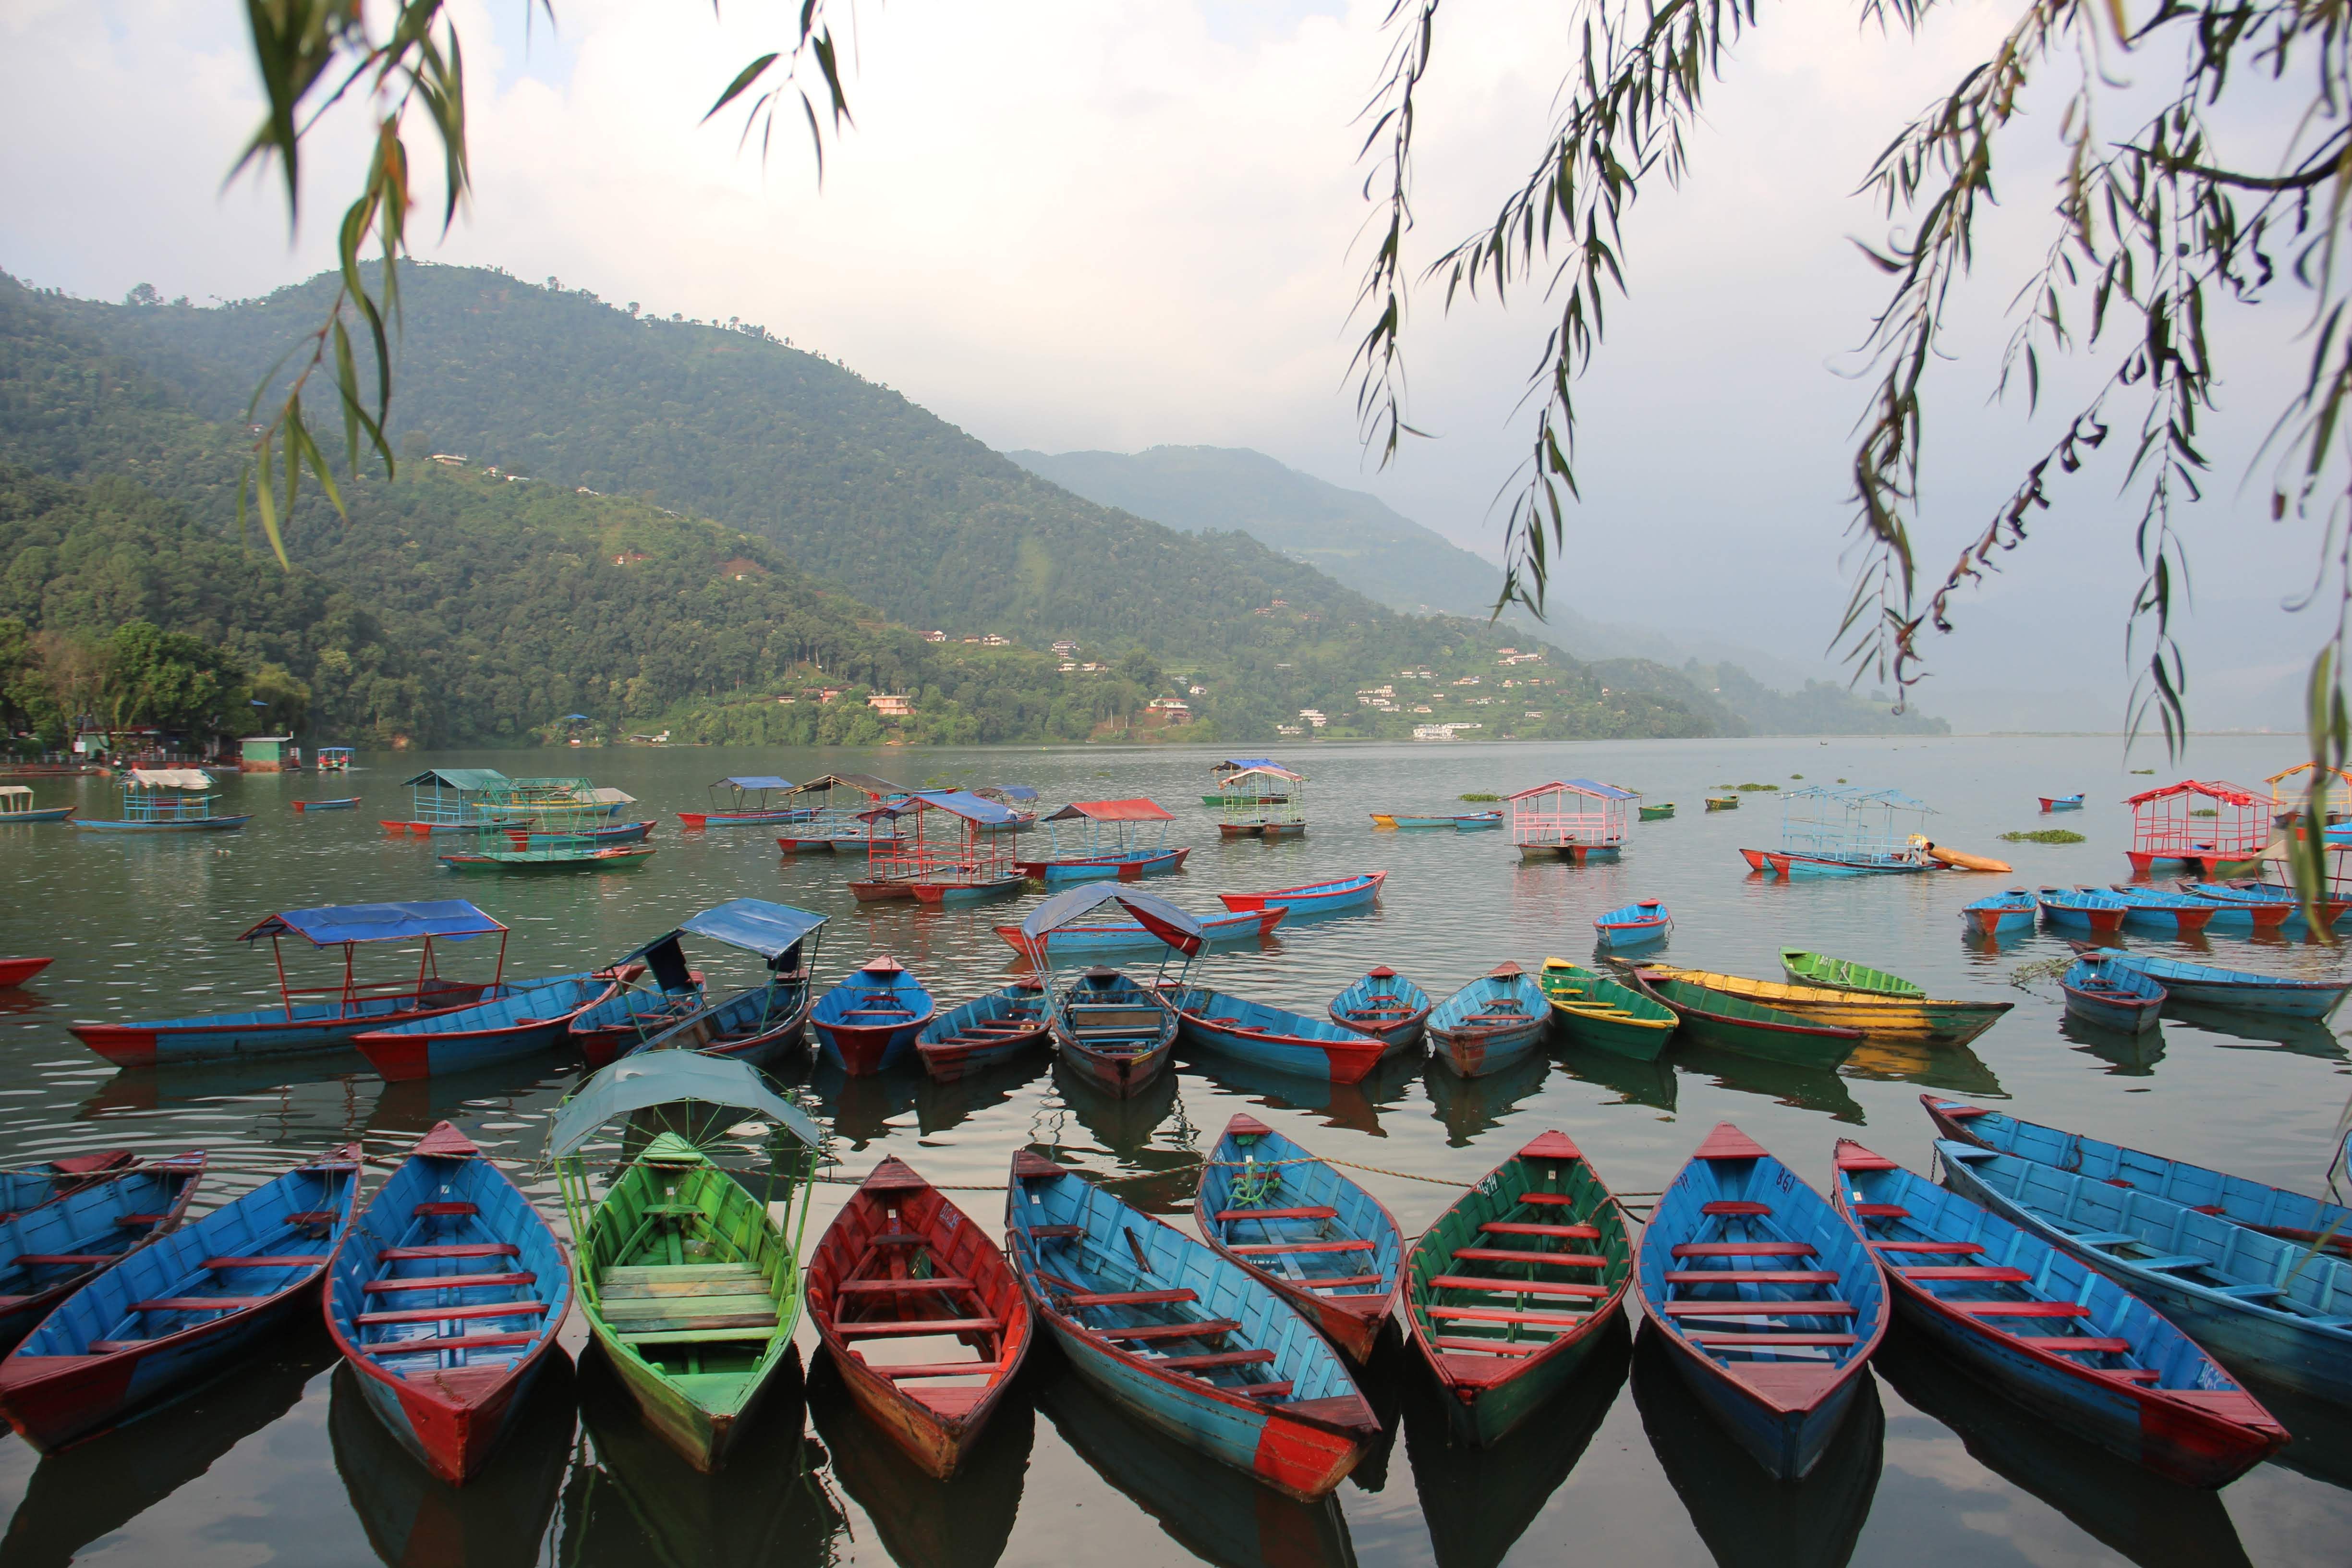 Boats in Pokhara, Nepal